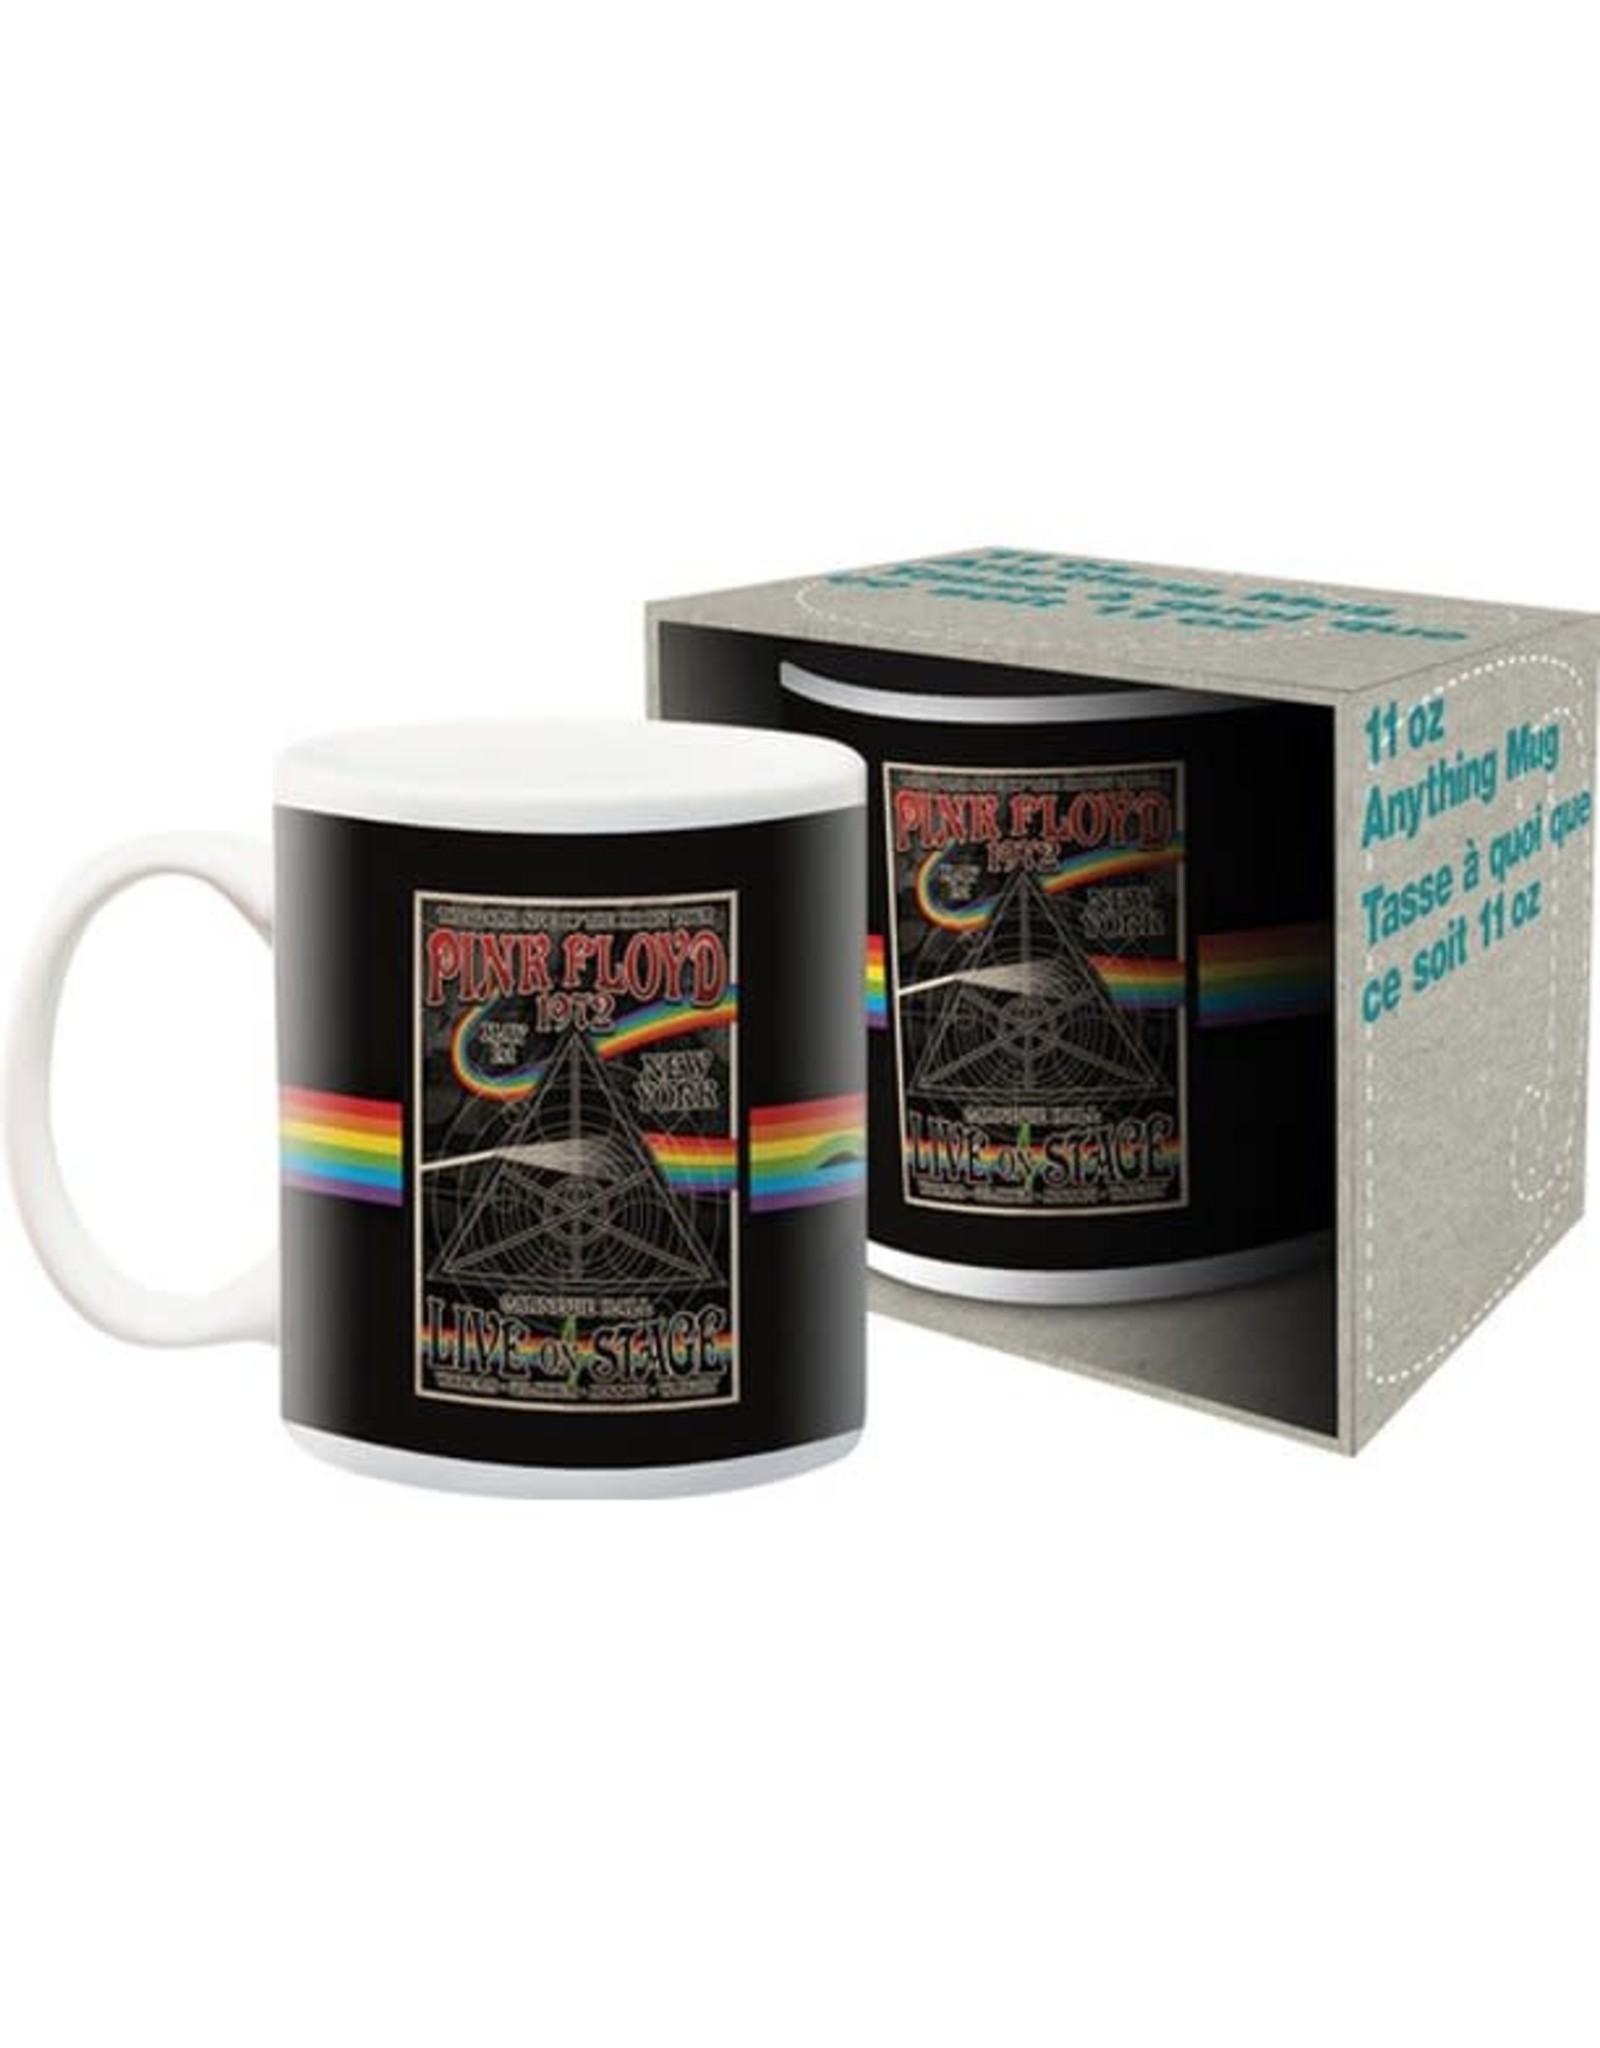 Aquarius Pink Floyd 1972 The dark side of the moon tour mug